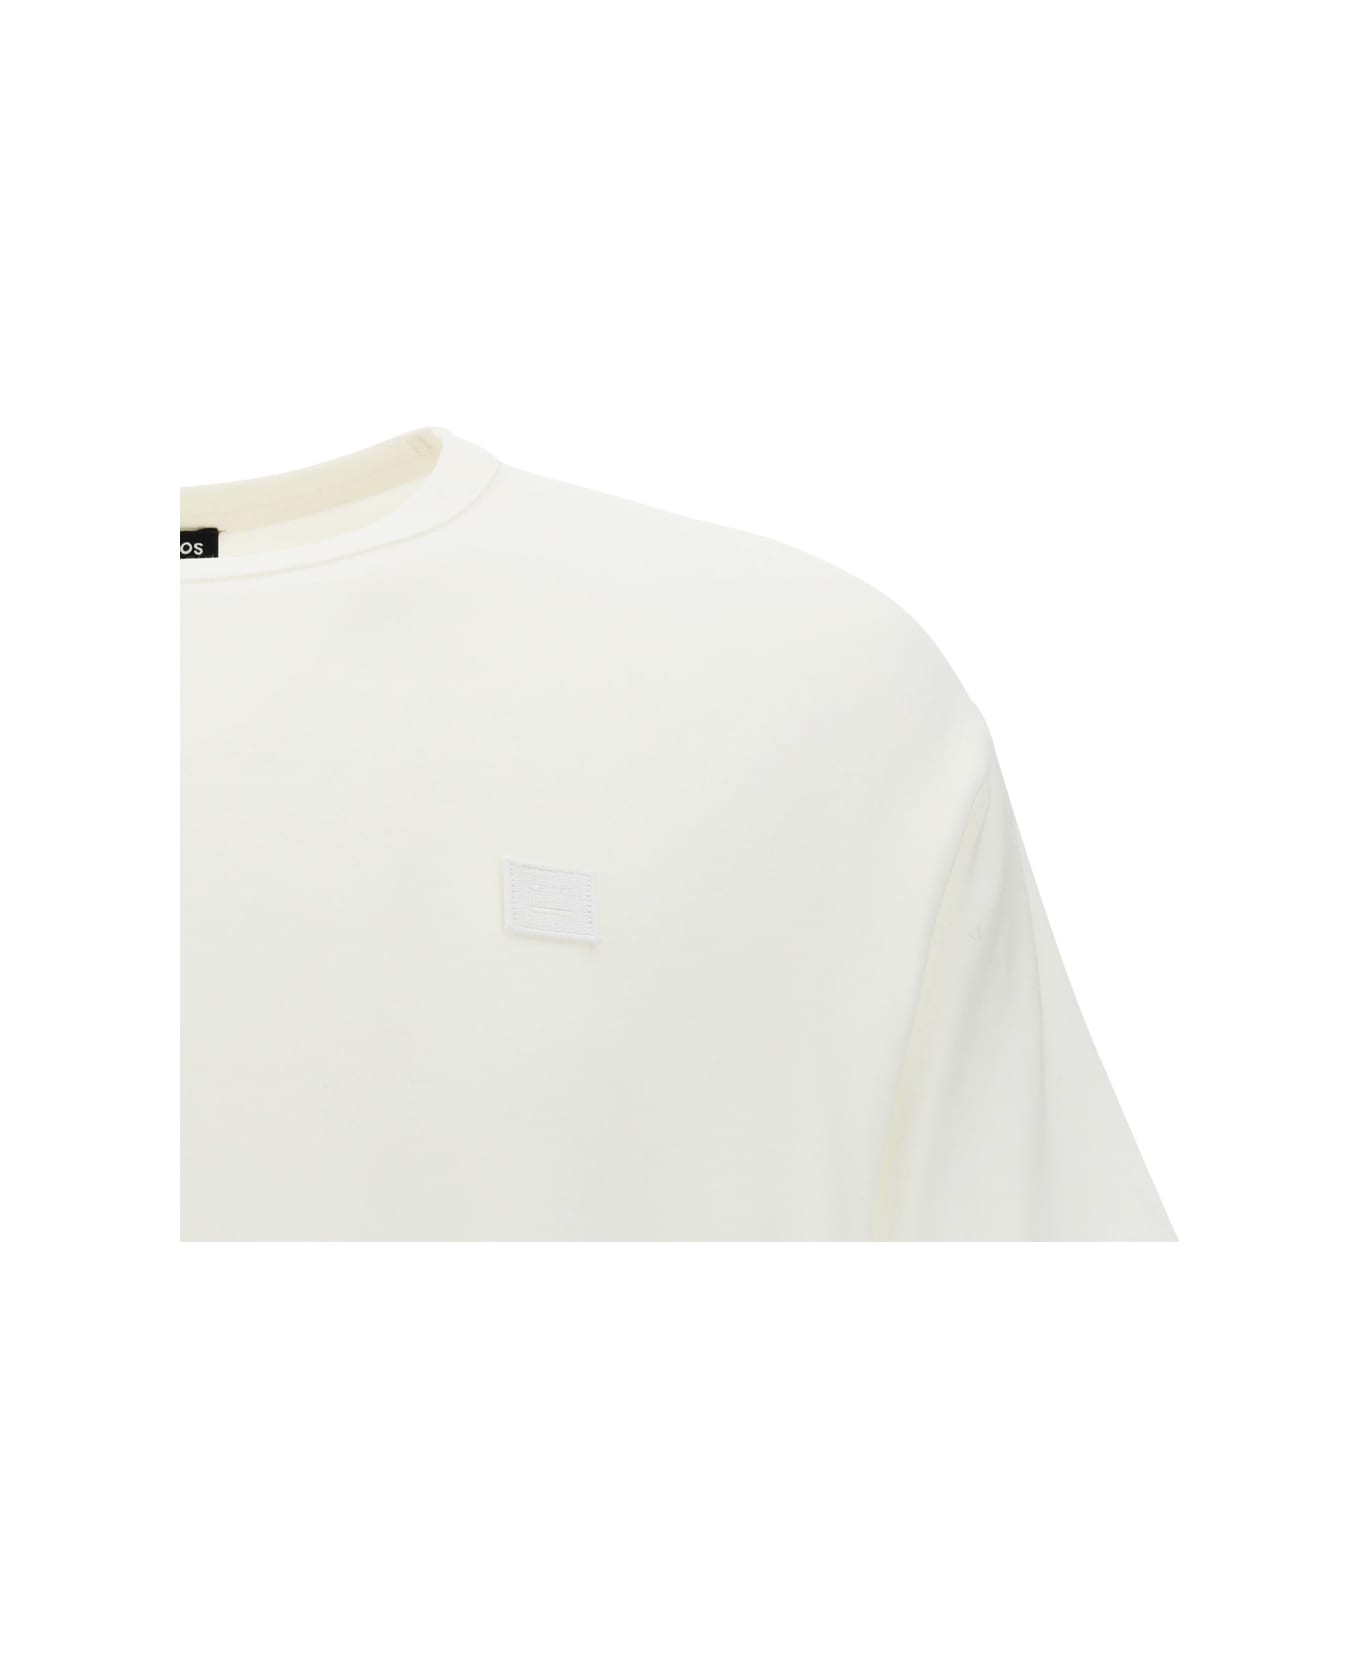 Acne Studios T-shirt - White